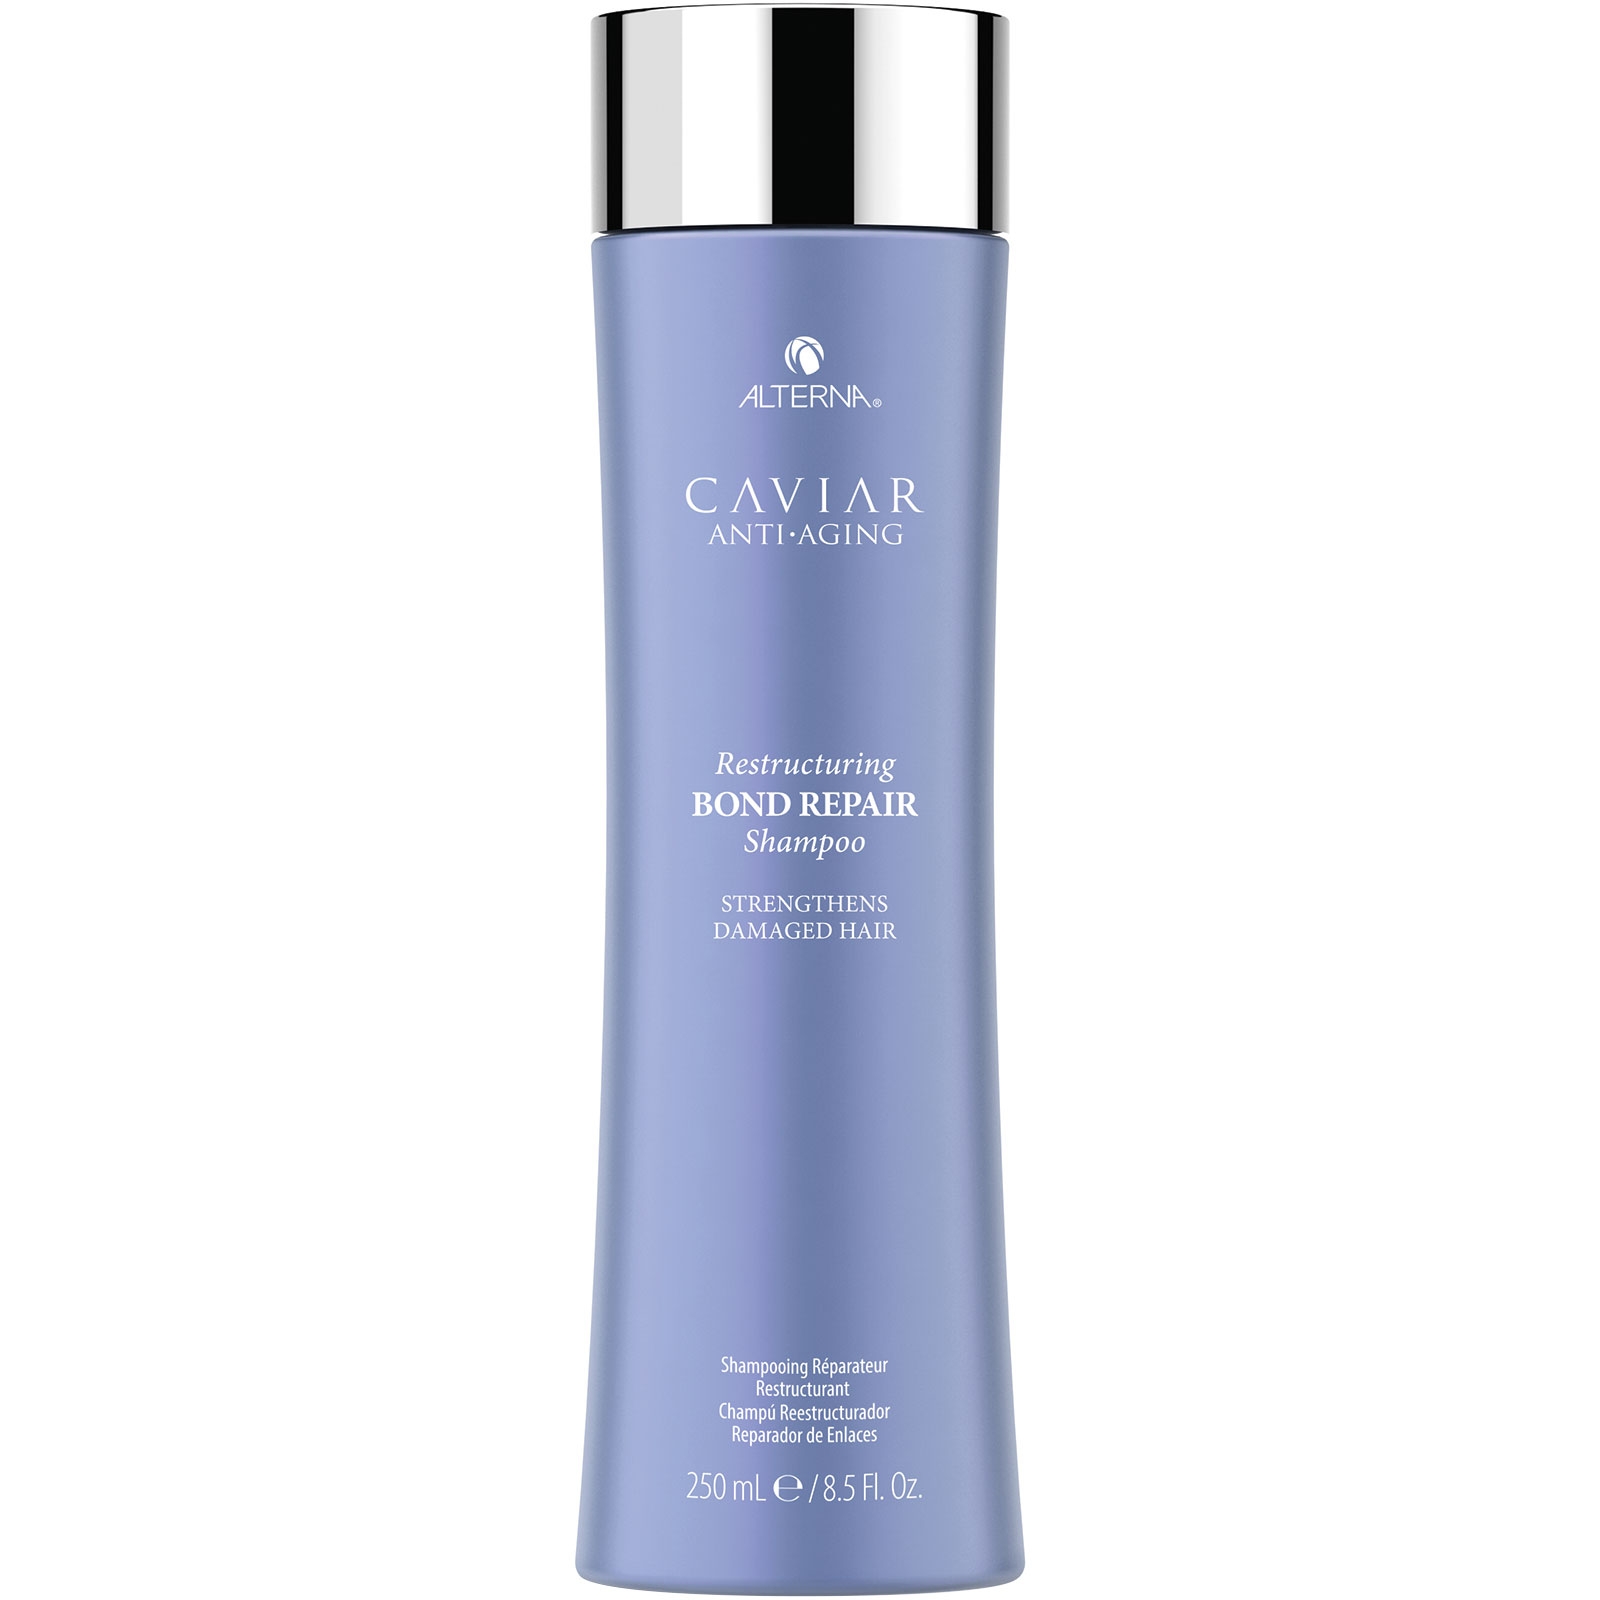 Alterna - Caviar Anti-Aging - Restructuring Bond Repair Shampoo - 250 ml